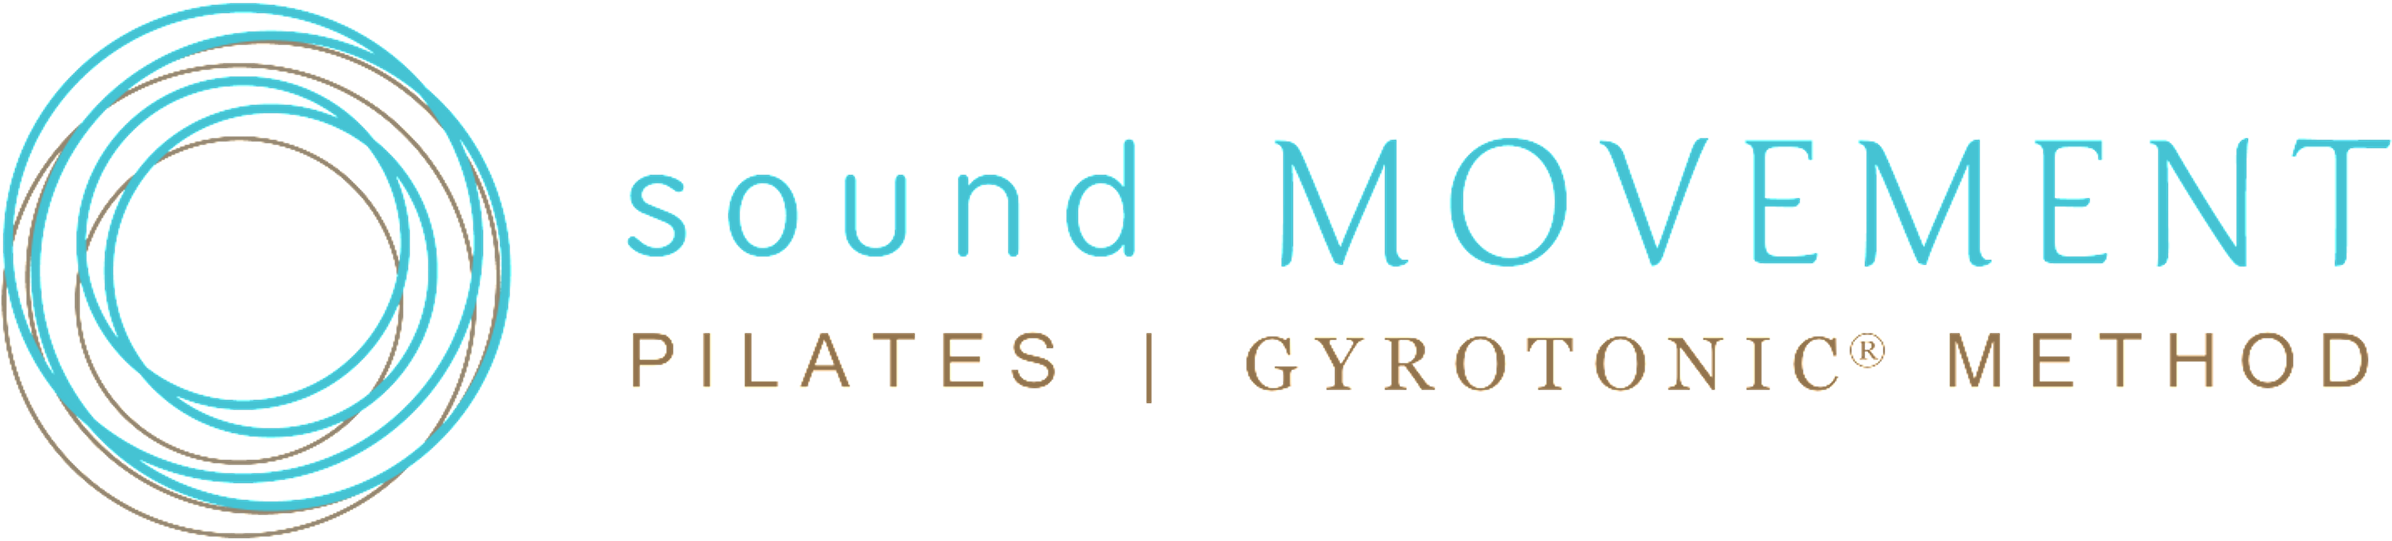 Sound Movement Pilates Gyrotonic Logo